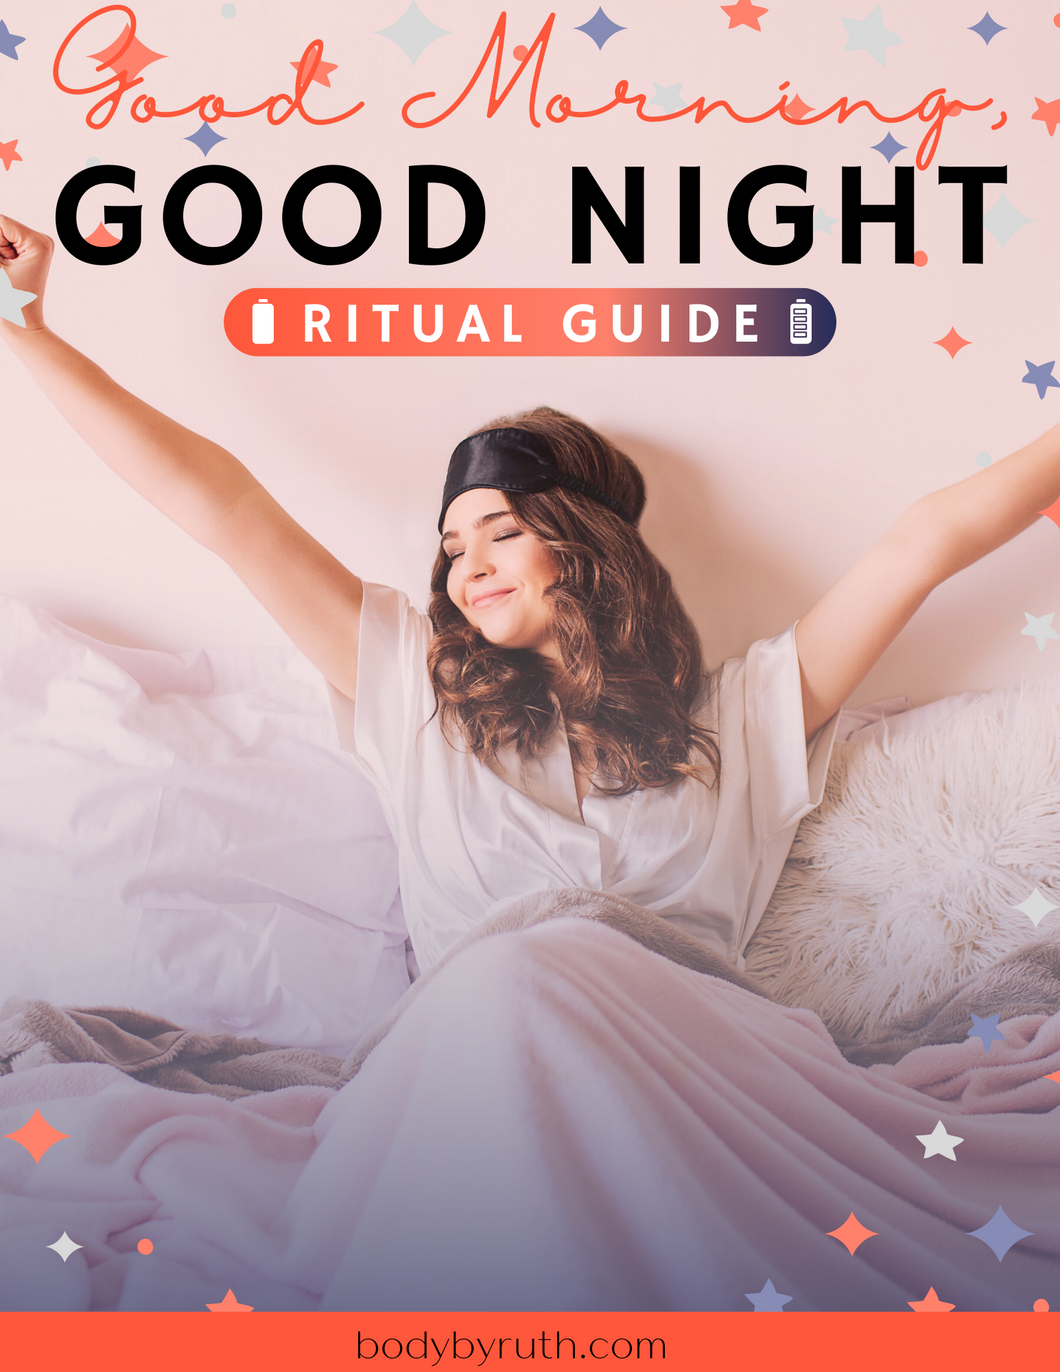 Good Morning Good Night Ritual Guide